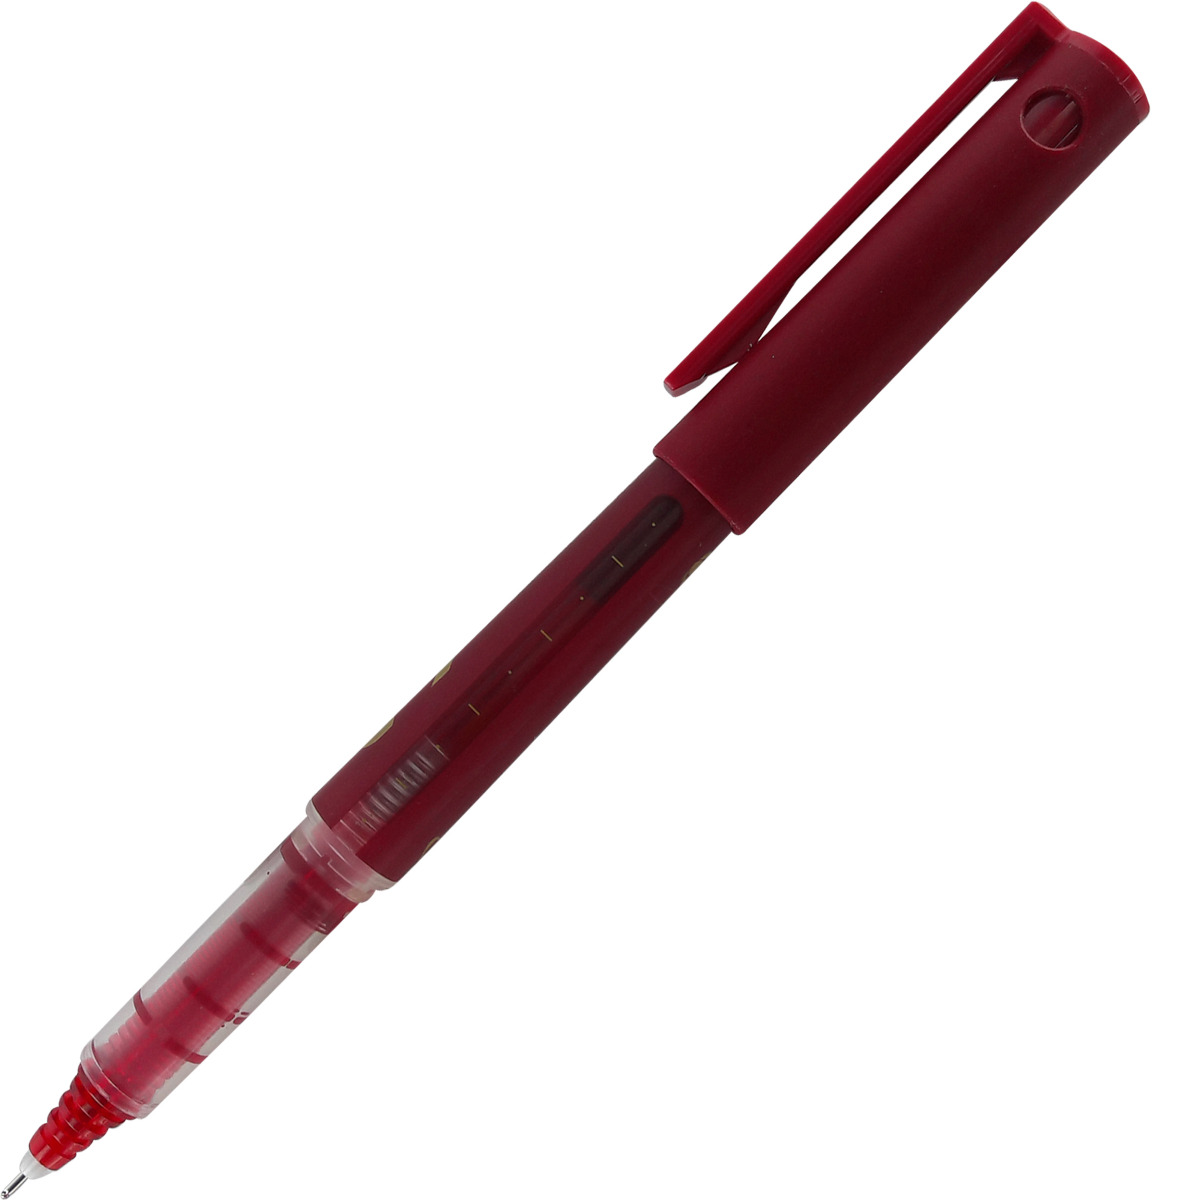 Pilot Model ; 12465 HI Techpoint V7 Red Color Body Cap Type Gel Pen